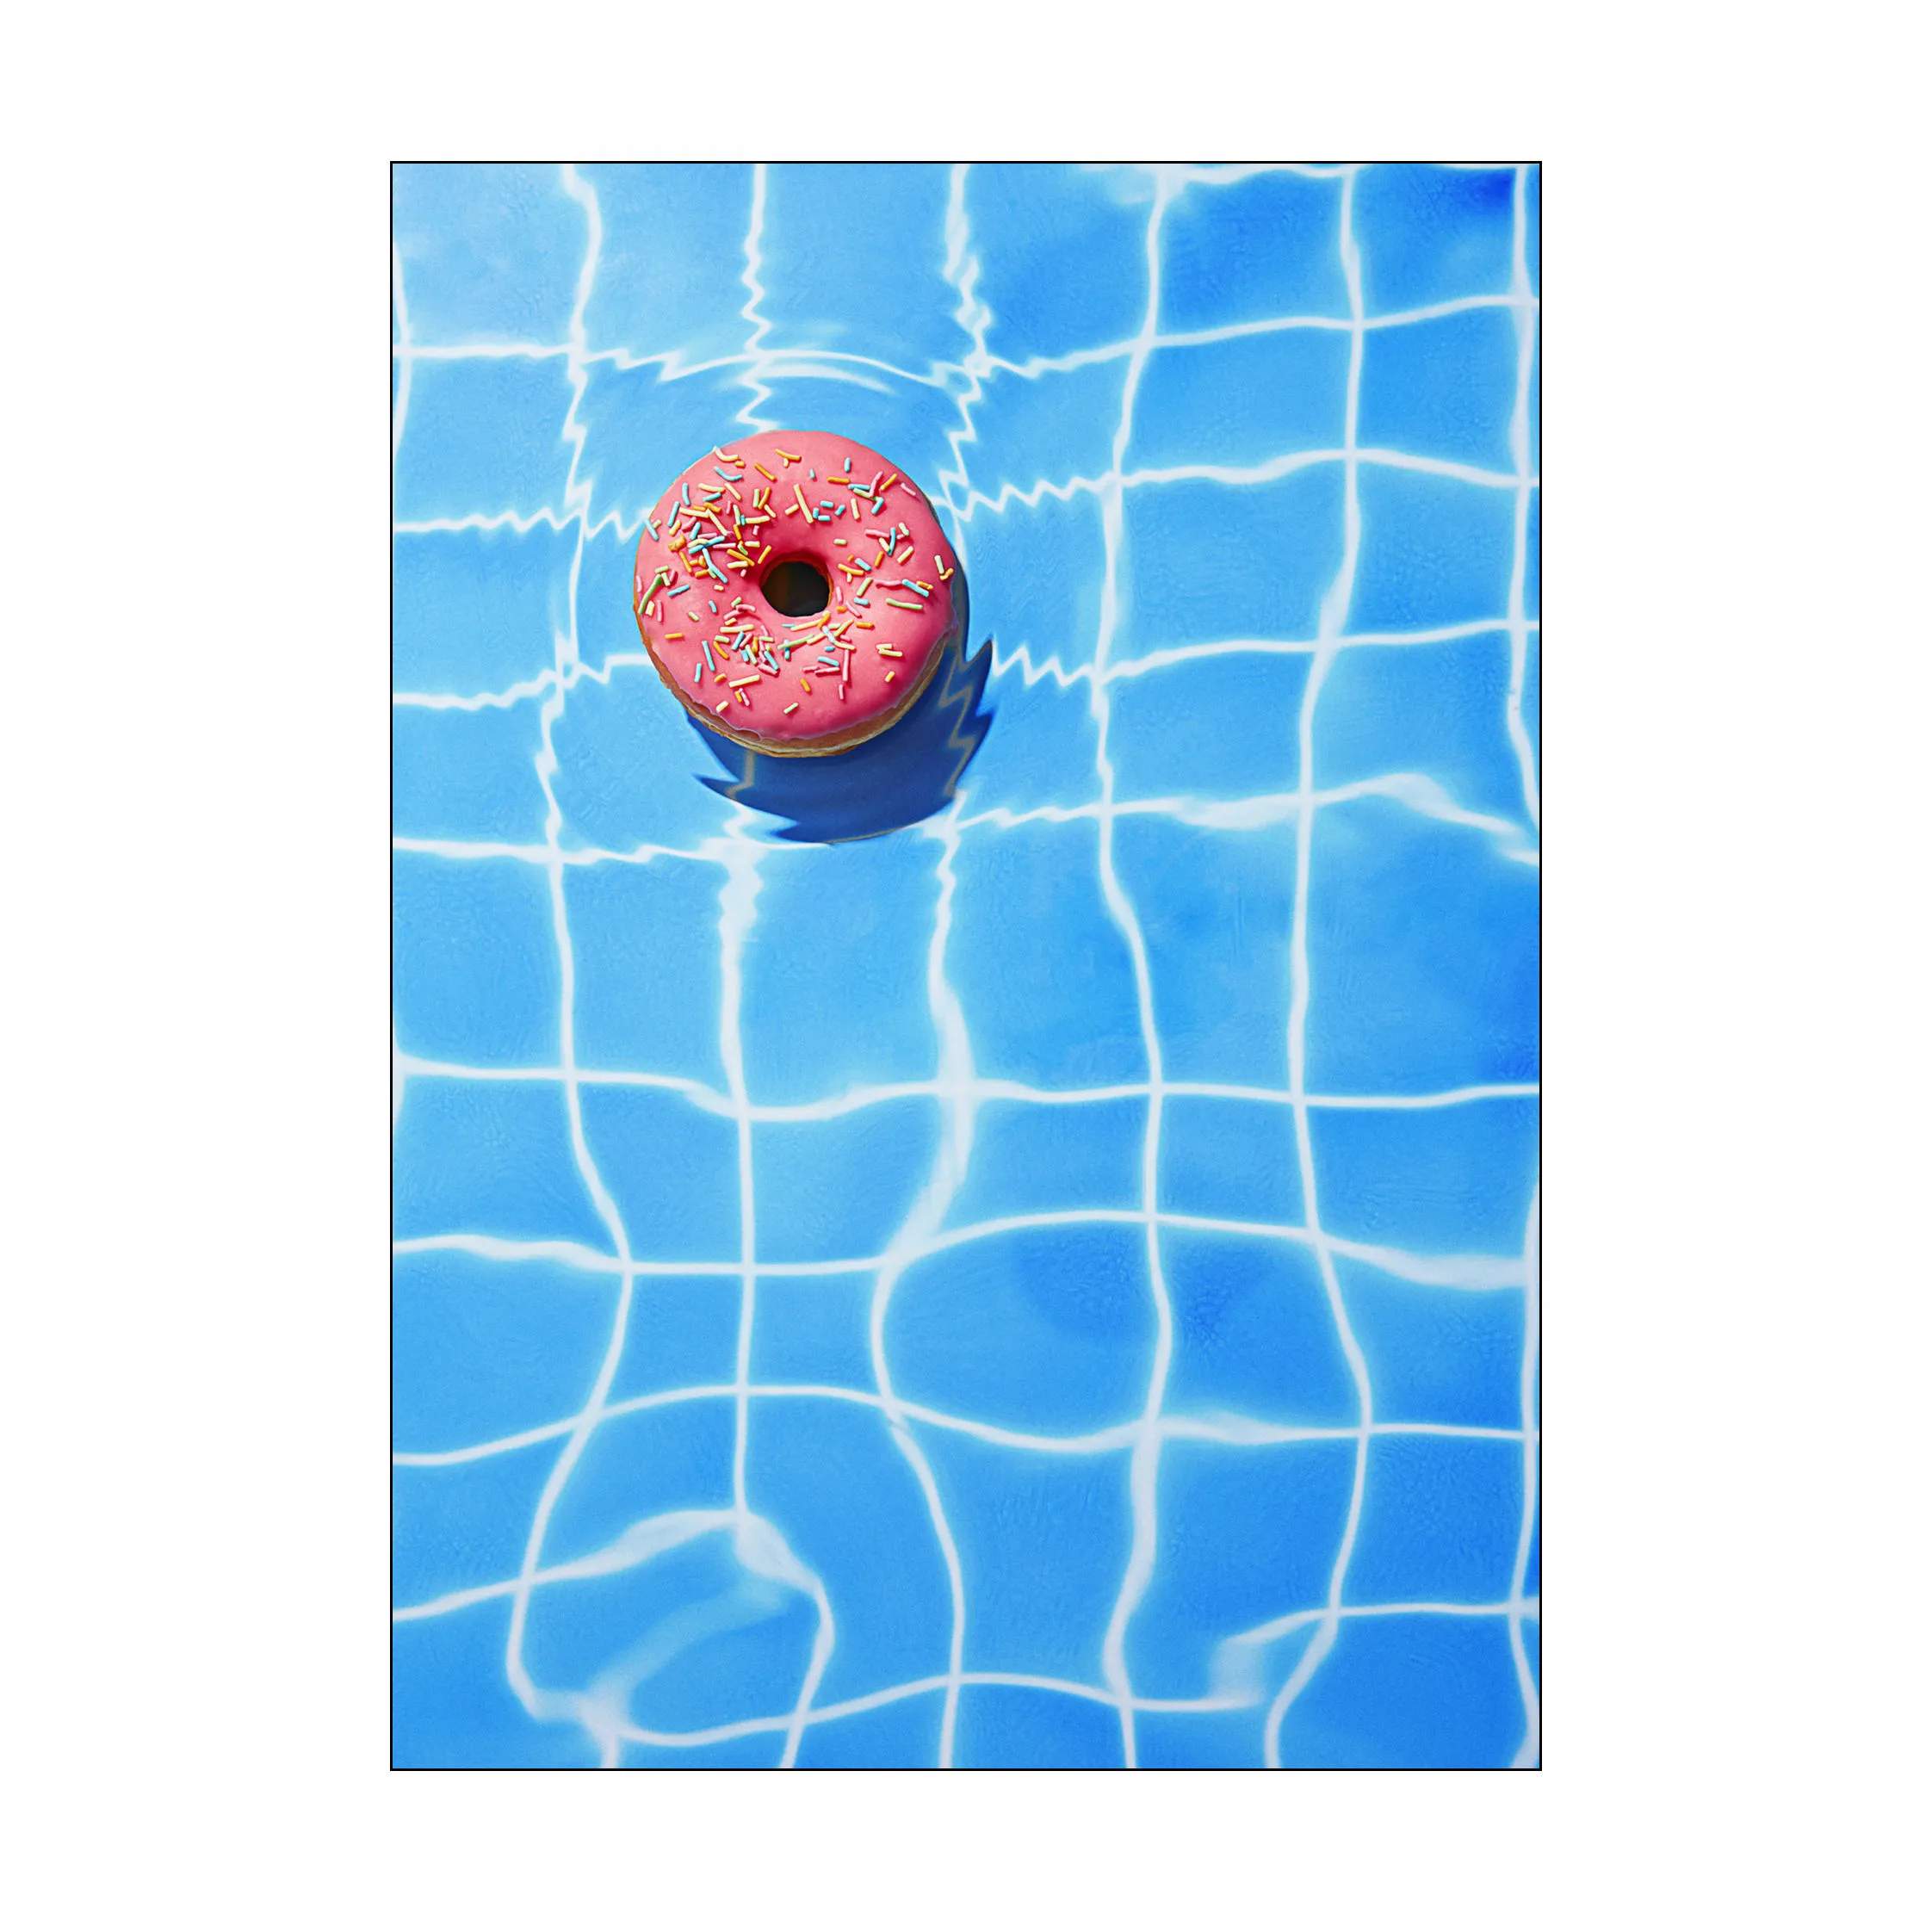 Plakat - Pool Doughnut, blå/lyserød, large